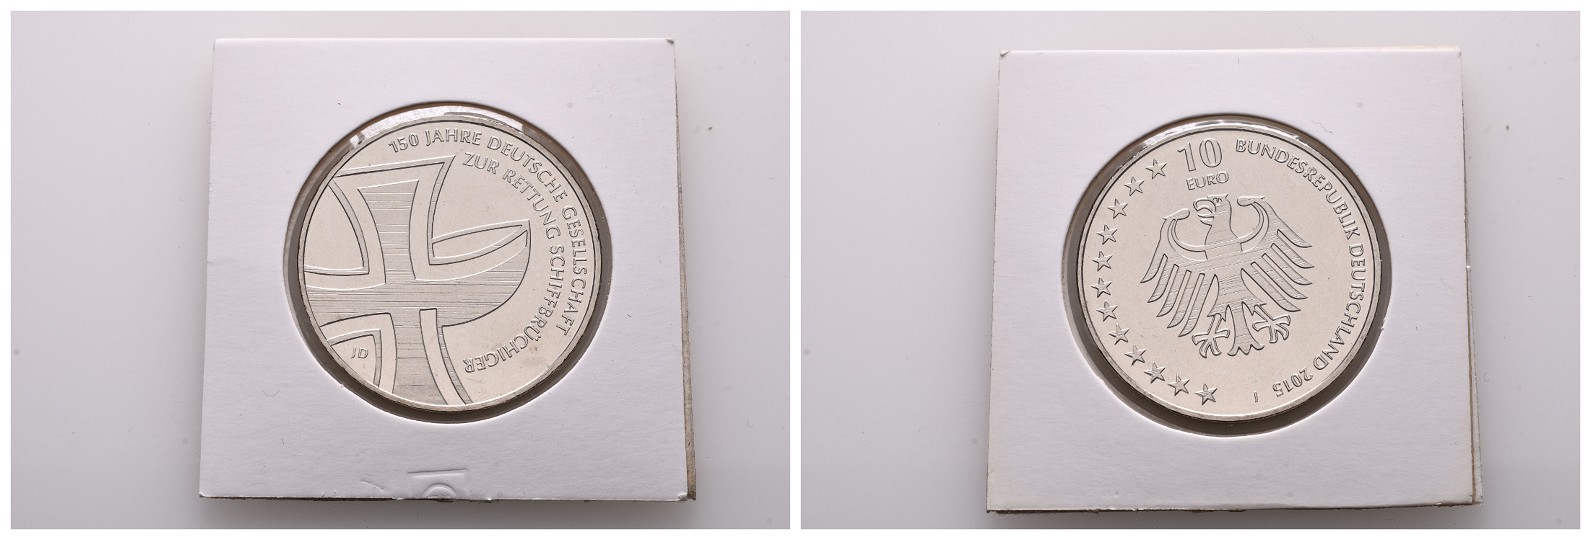  MGS Italien KMS Kursmünzensatz 2002 3,88 Euro in Folder   